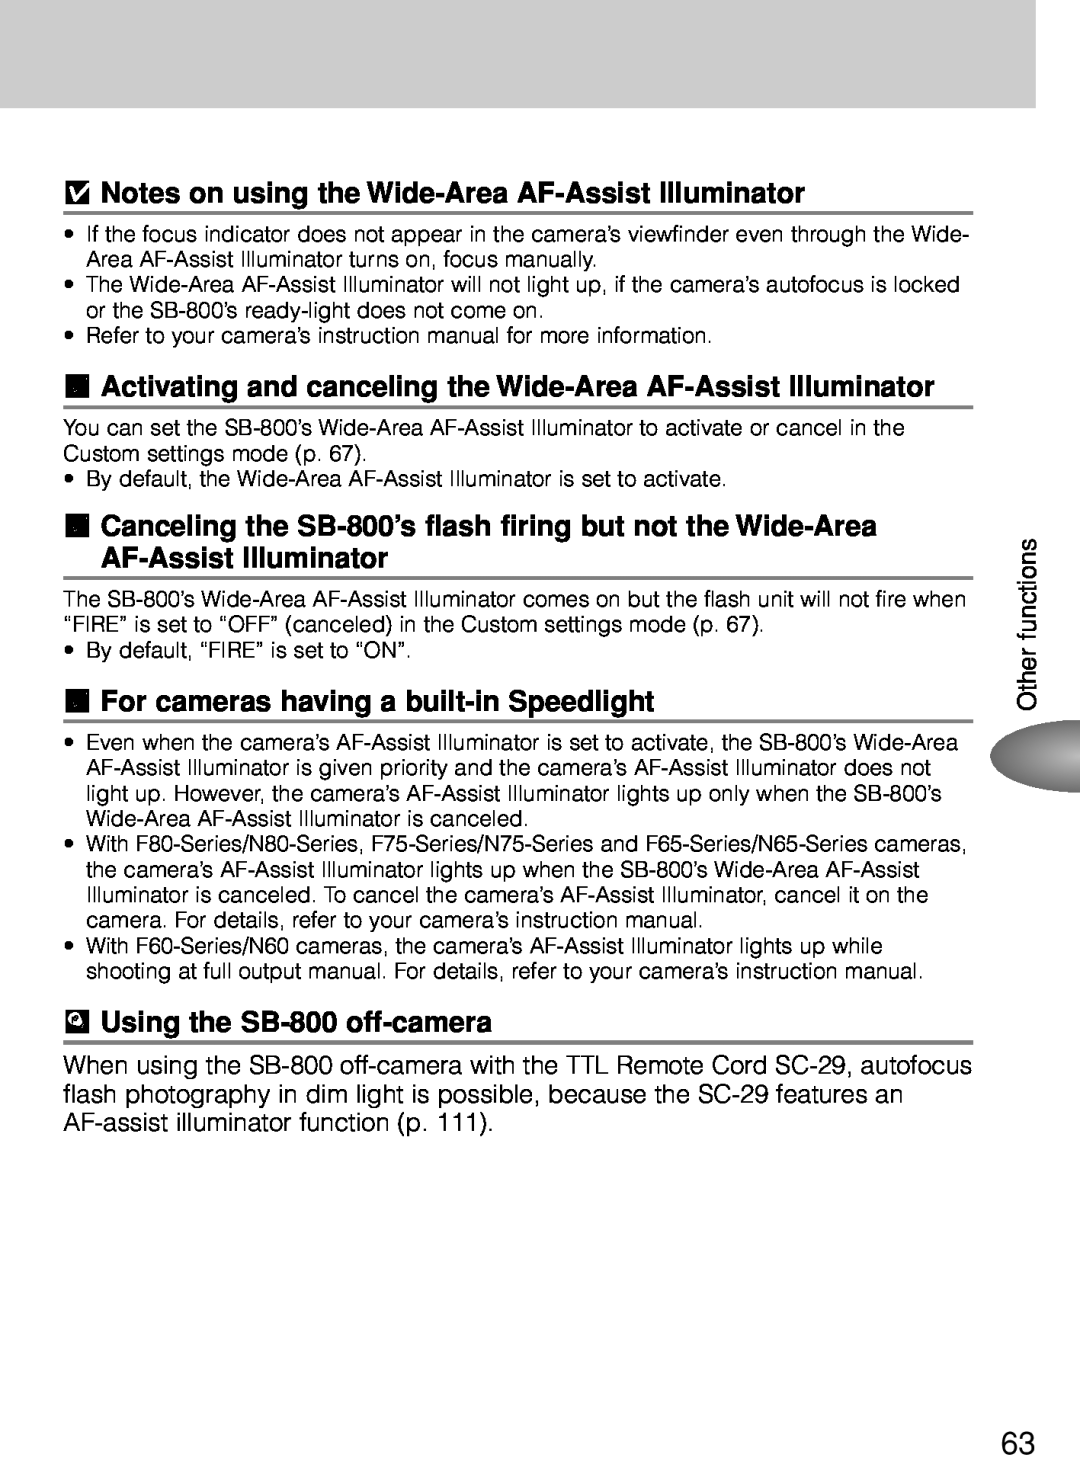 Nikon SB-800 v Notes on using the Wide-Area AF-Assist Illuminator, t For cameras having a built-in Speedlight 